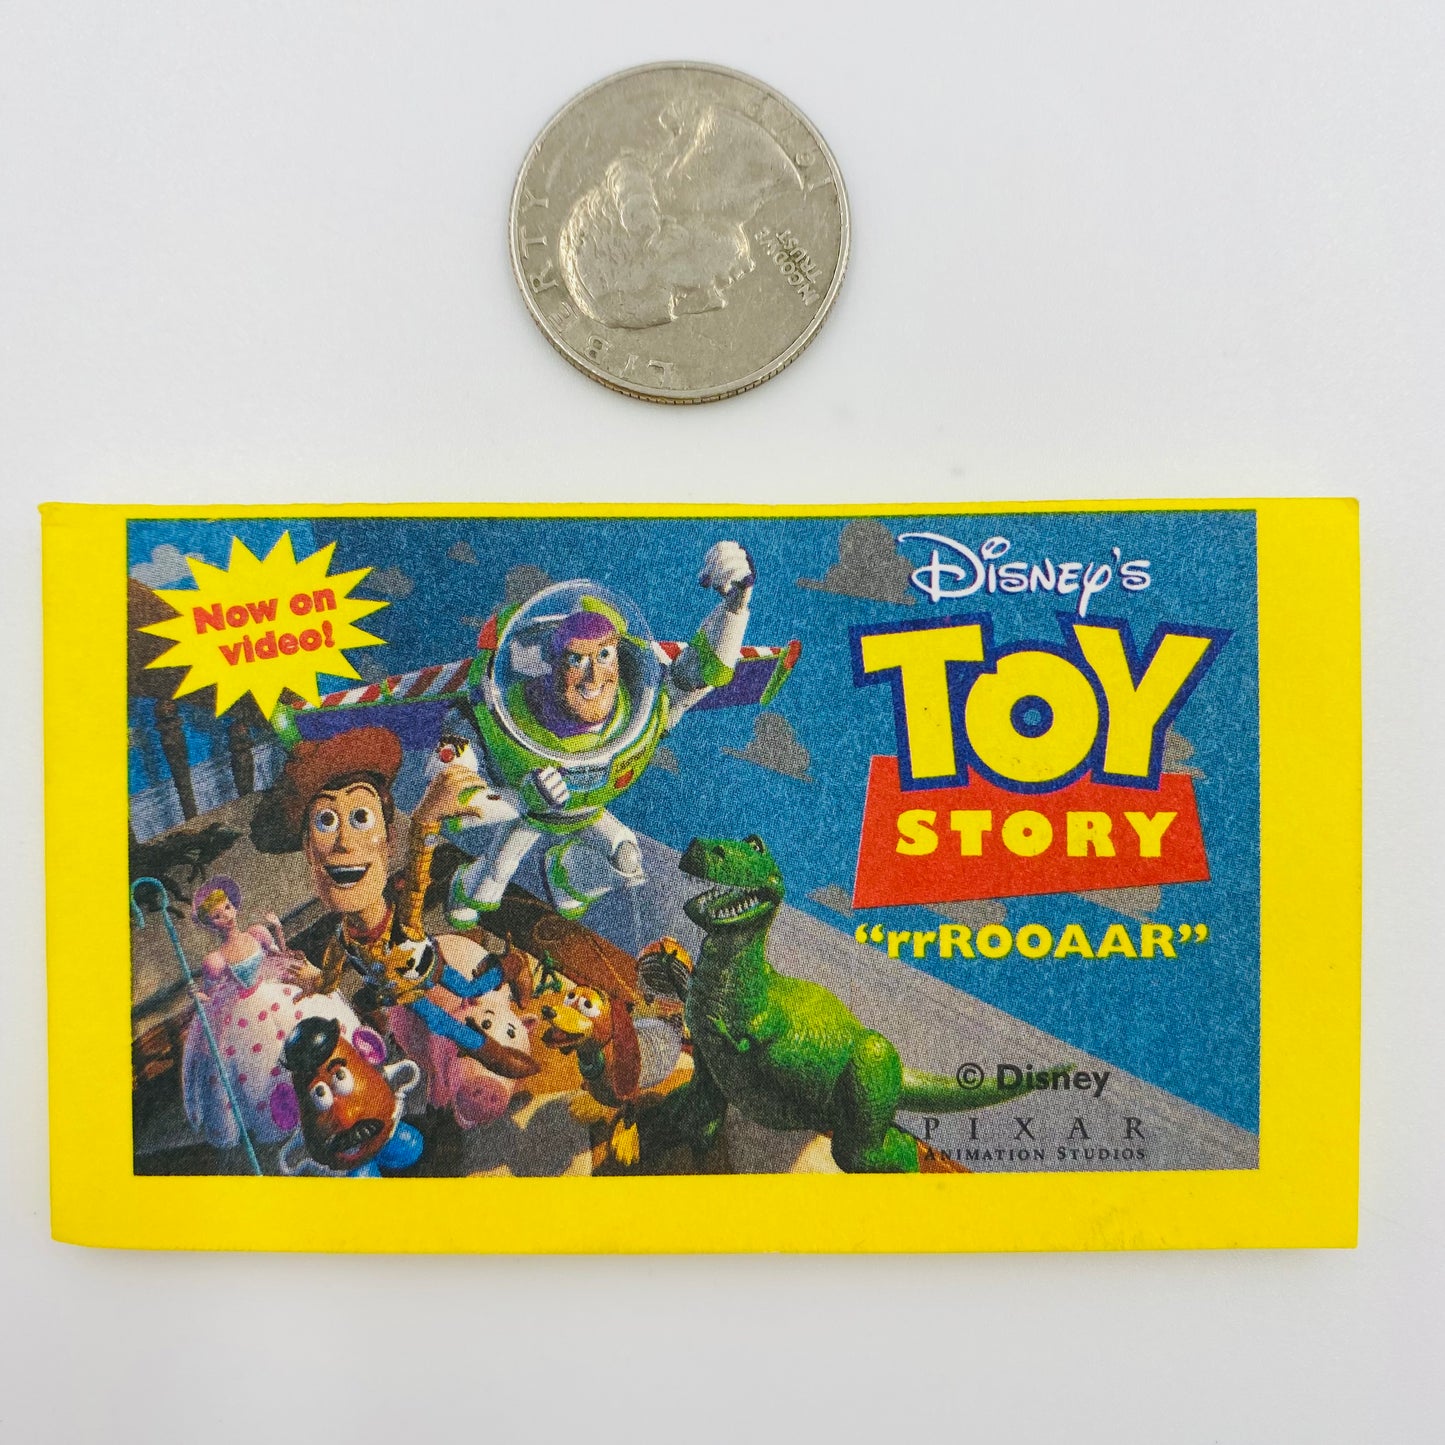 Toy Story Cinnamon Toast Crunch flip book: “rrROOAAR” & “Look Buzz An Alien”